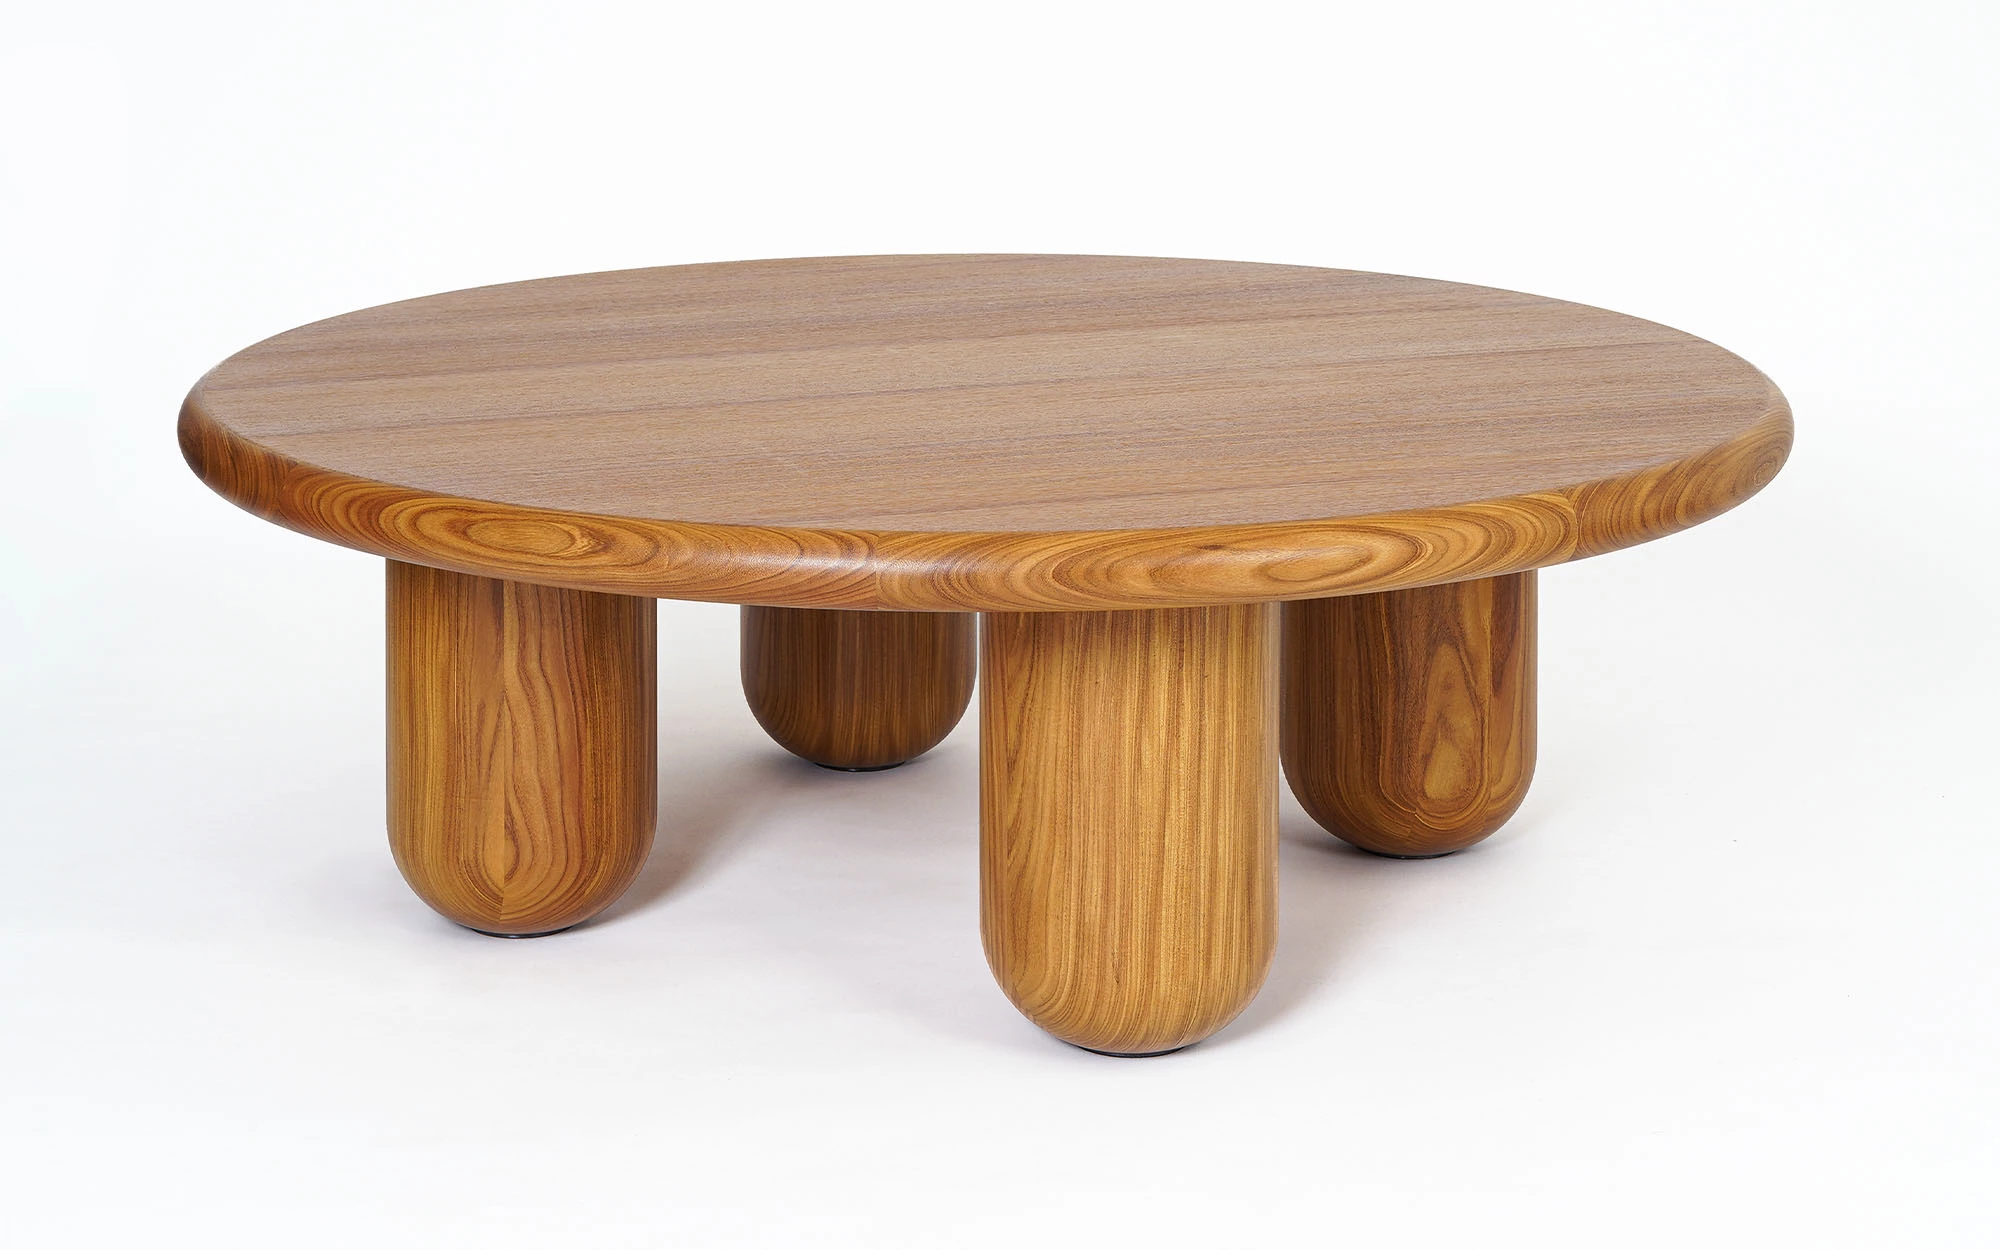 Organism coffee table - Jaime Hayon - Pendant light - Galerie kreo